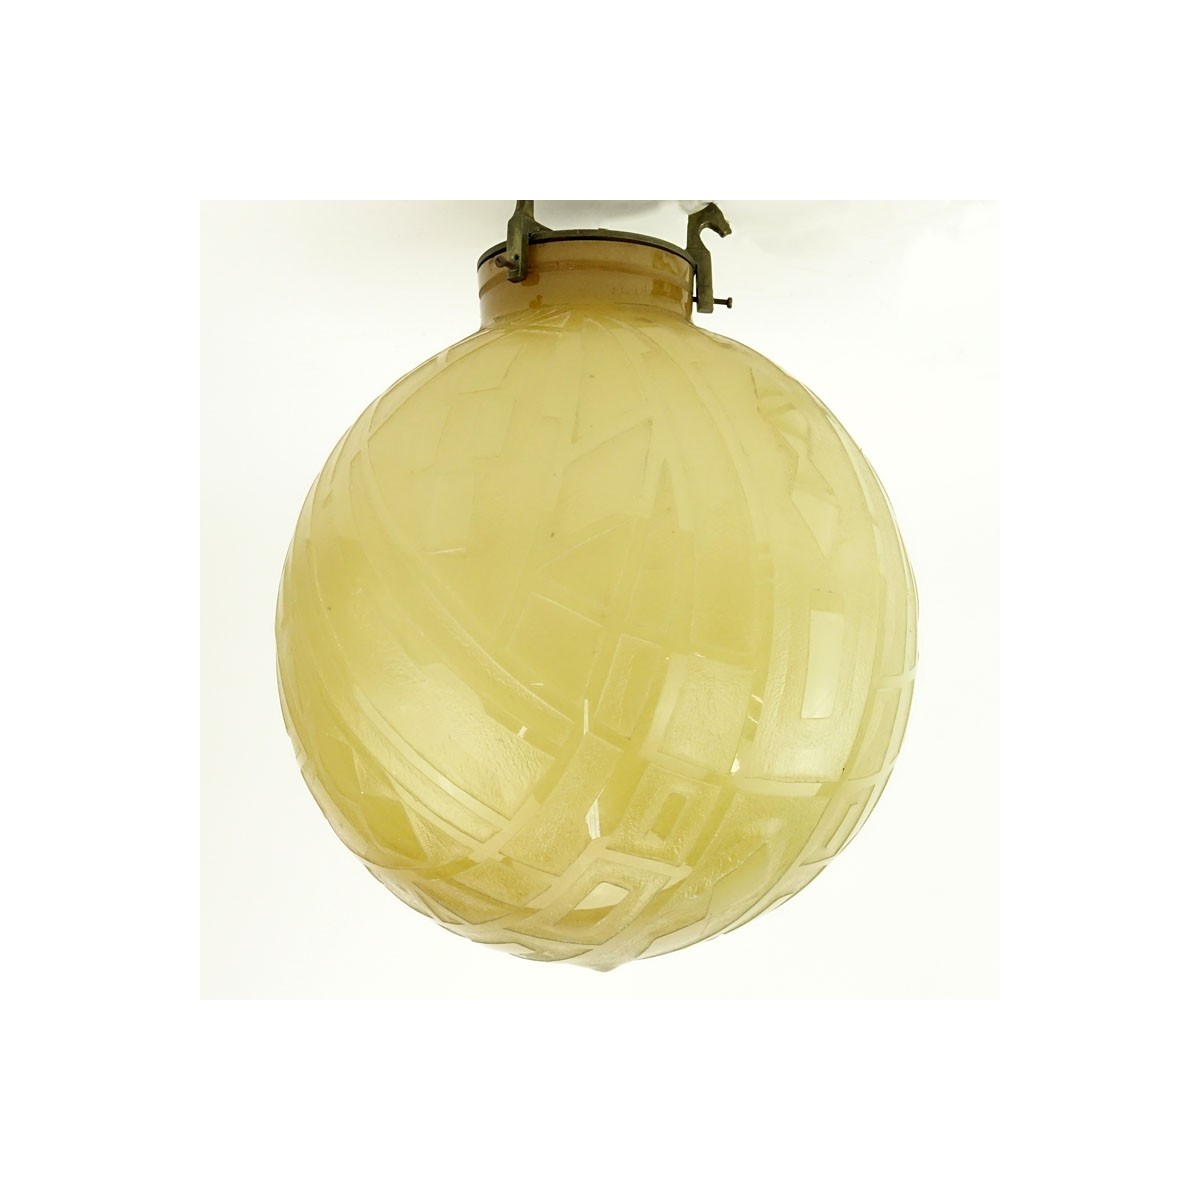 Daum Nancy French Art Deco Pendant Light Chandelier. Signed "Daum Nancy". Pale amber color globe sh